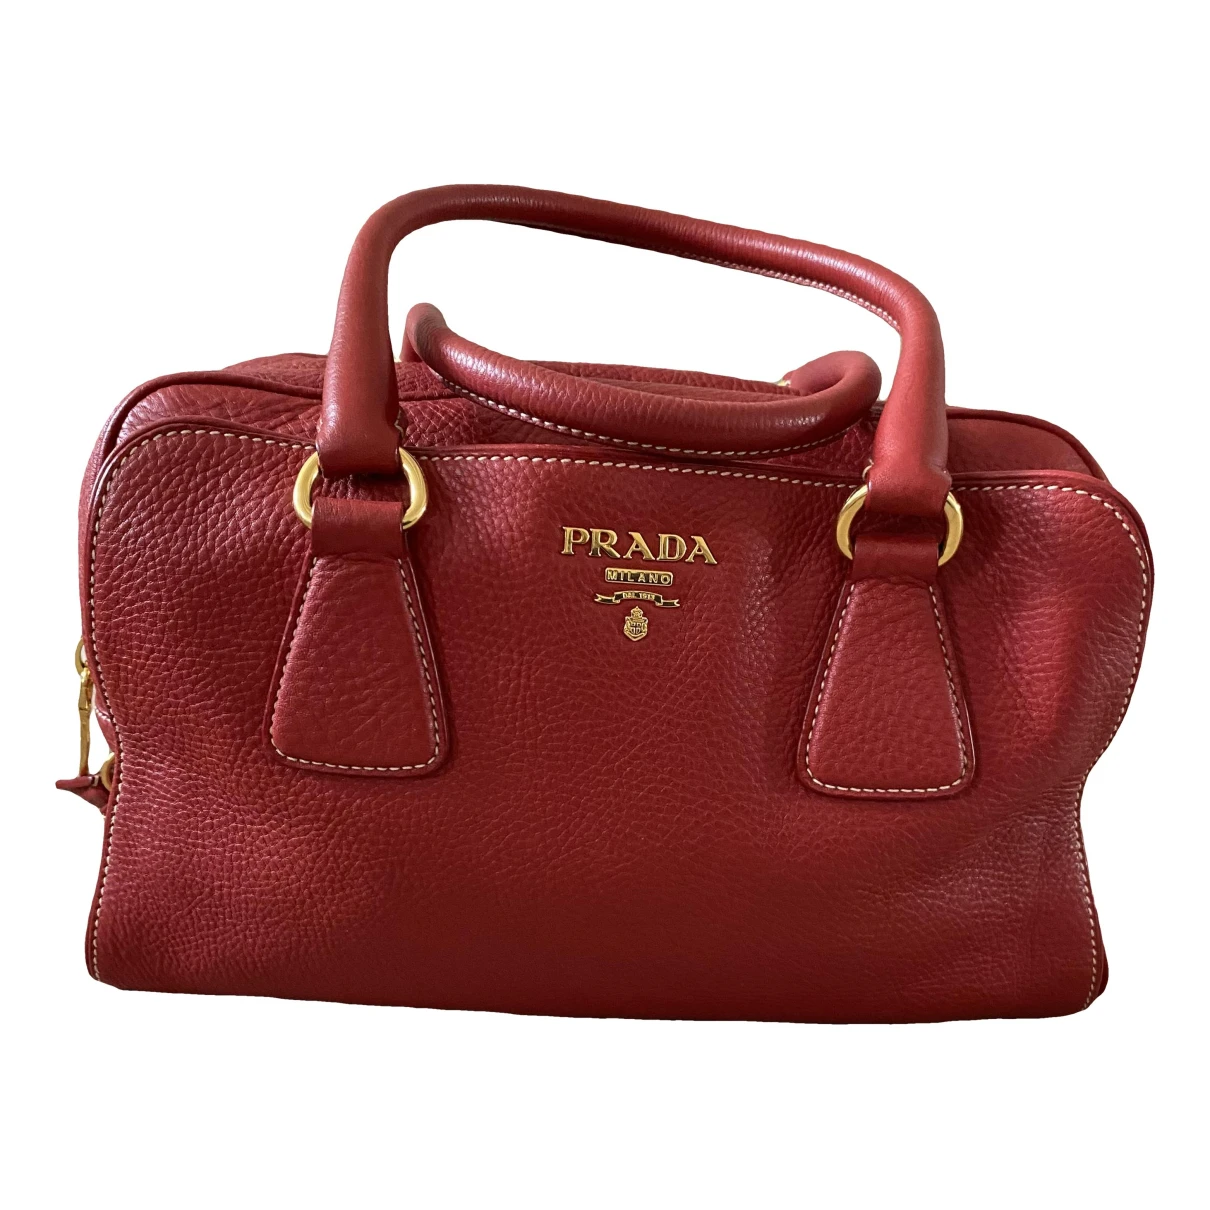 Pre-owned Prada Promenade Leather Handbag In Burgundy